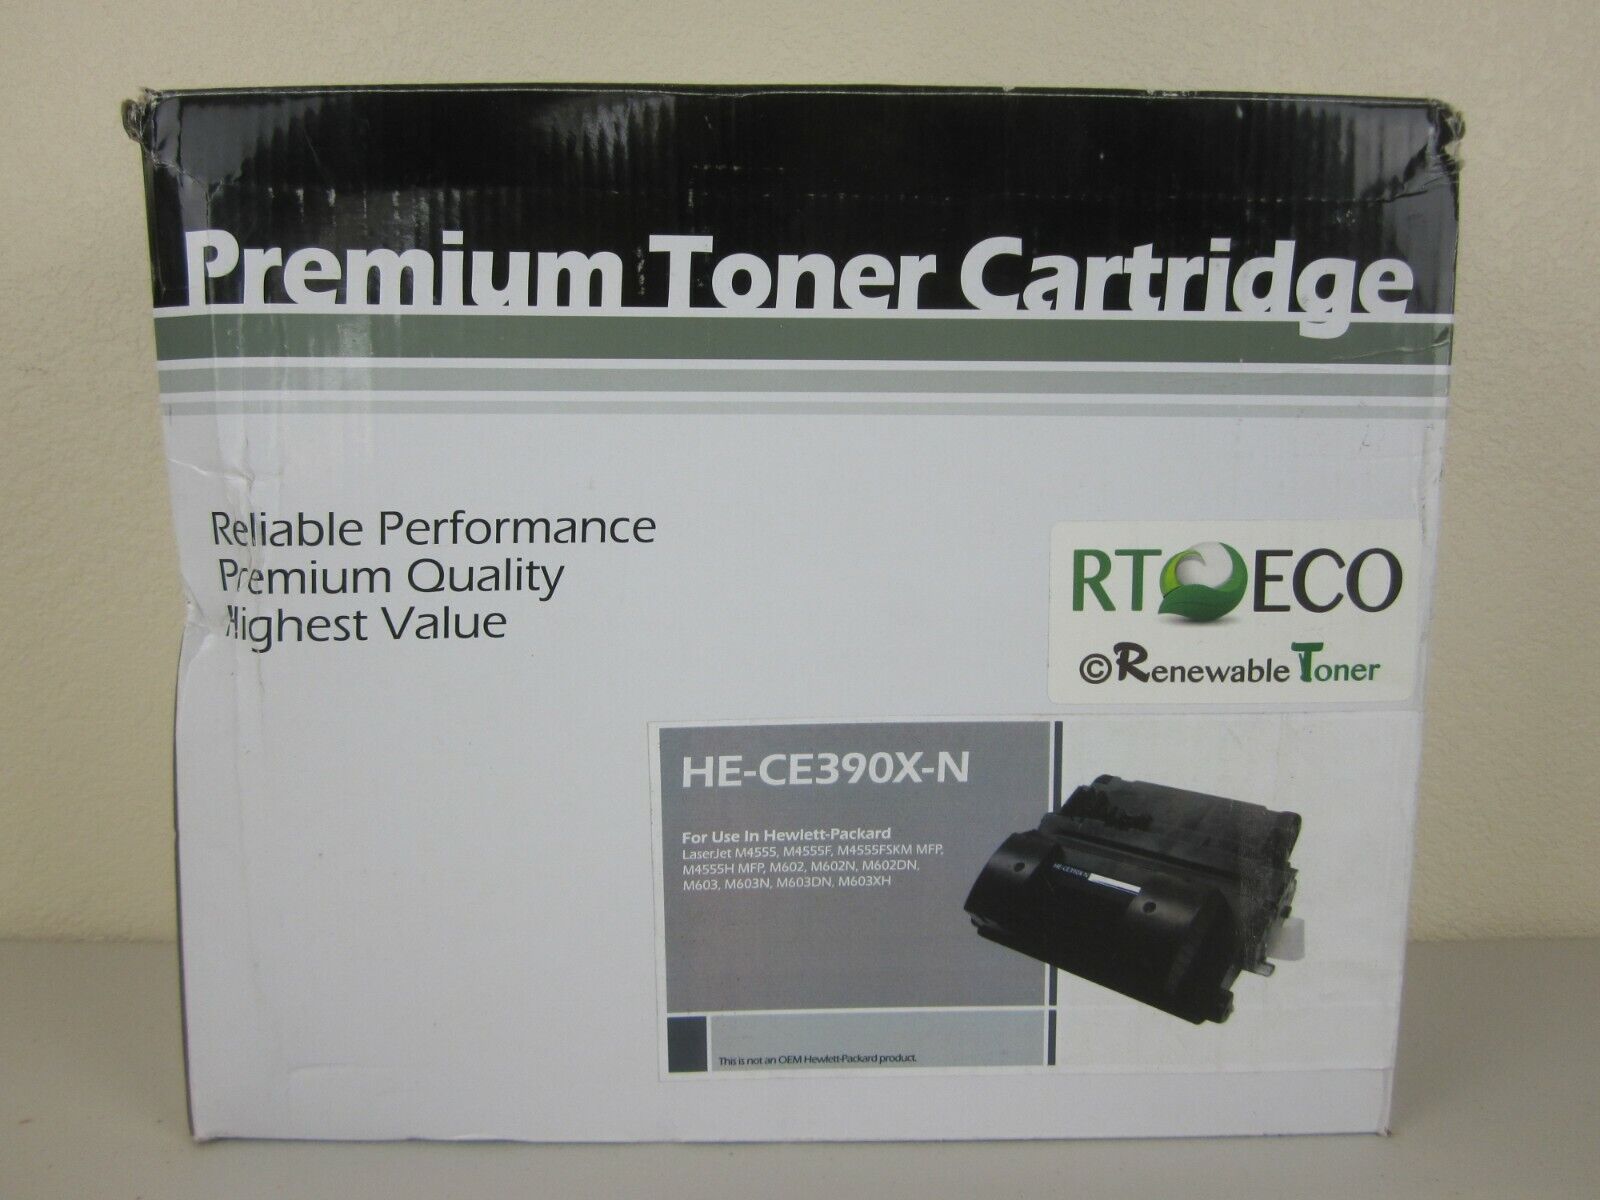 Renewable Toner Cartridge HE-CE390X-N For HP M4555 M602 M603 - Black (Brand New)